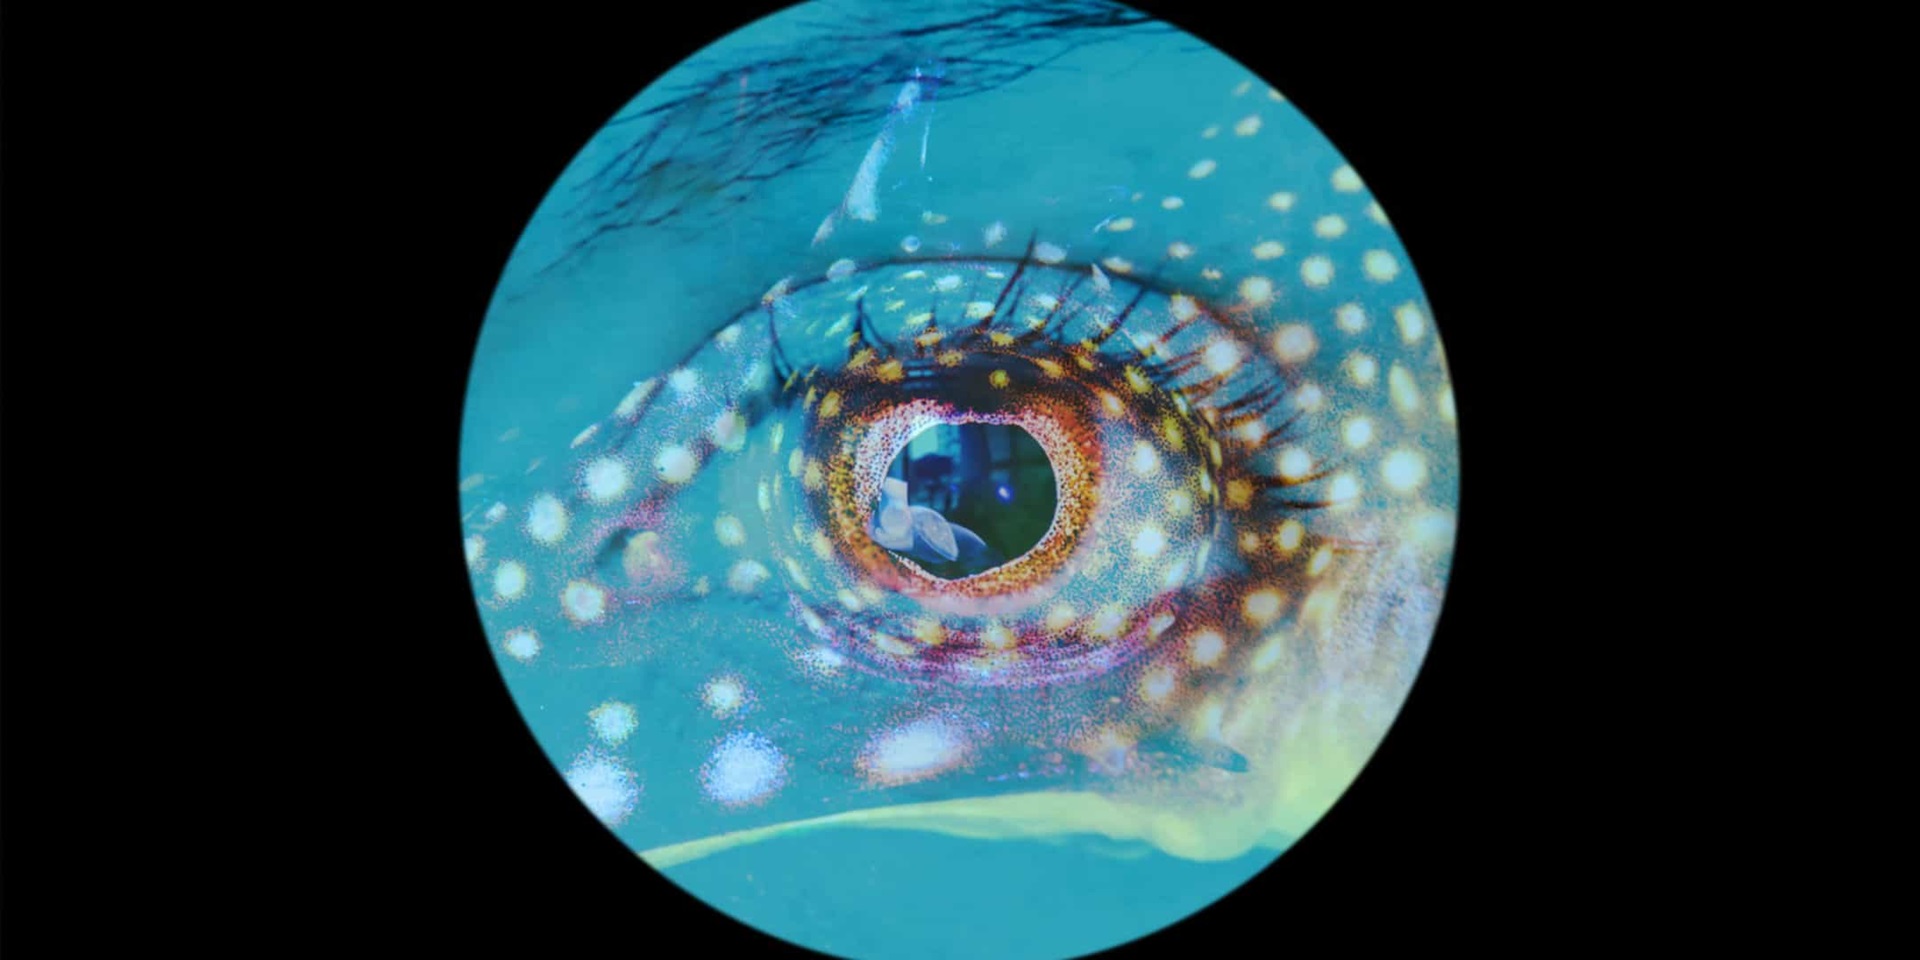 eye contact - seadragon. Image: Sylvana Alferez